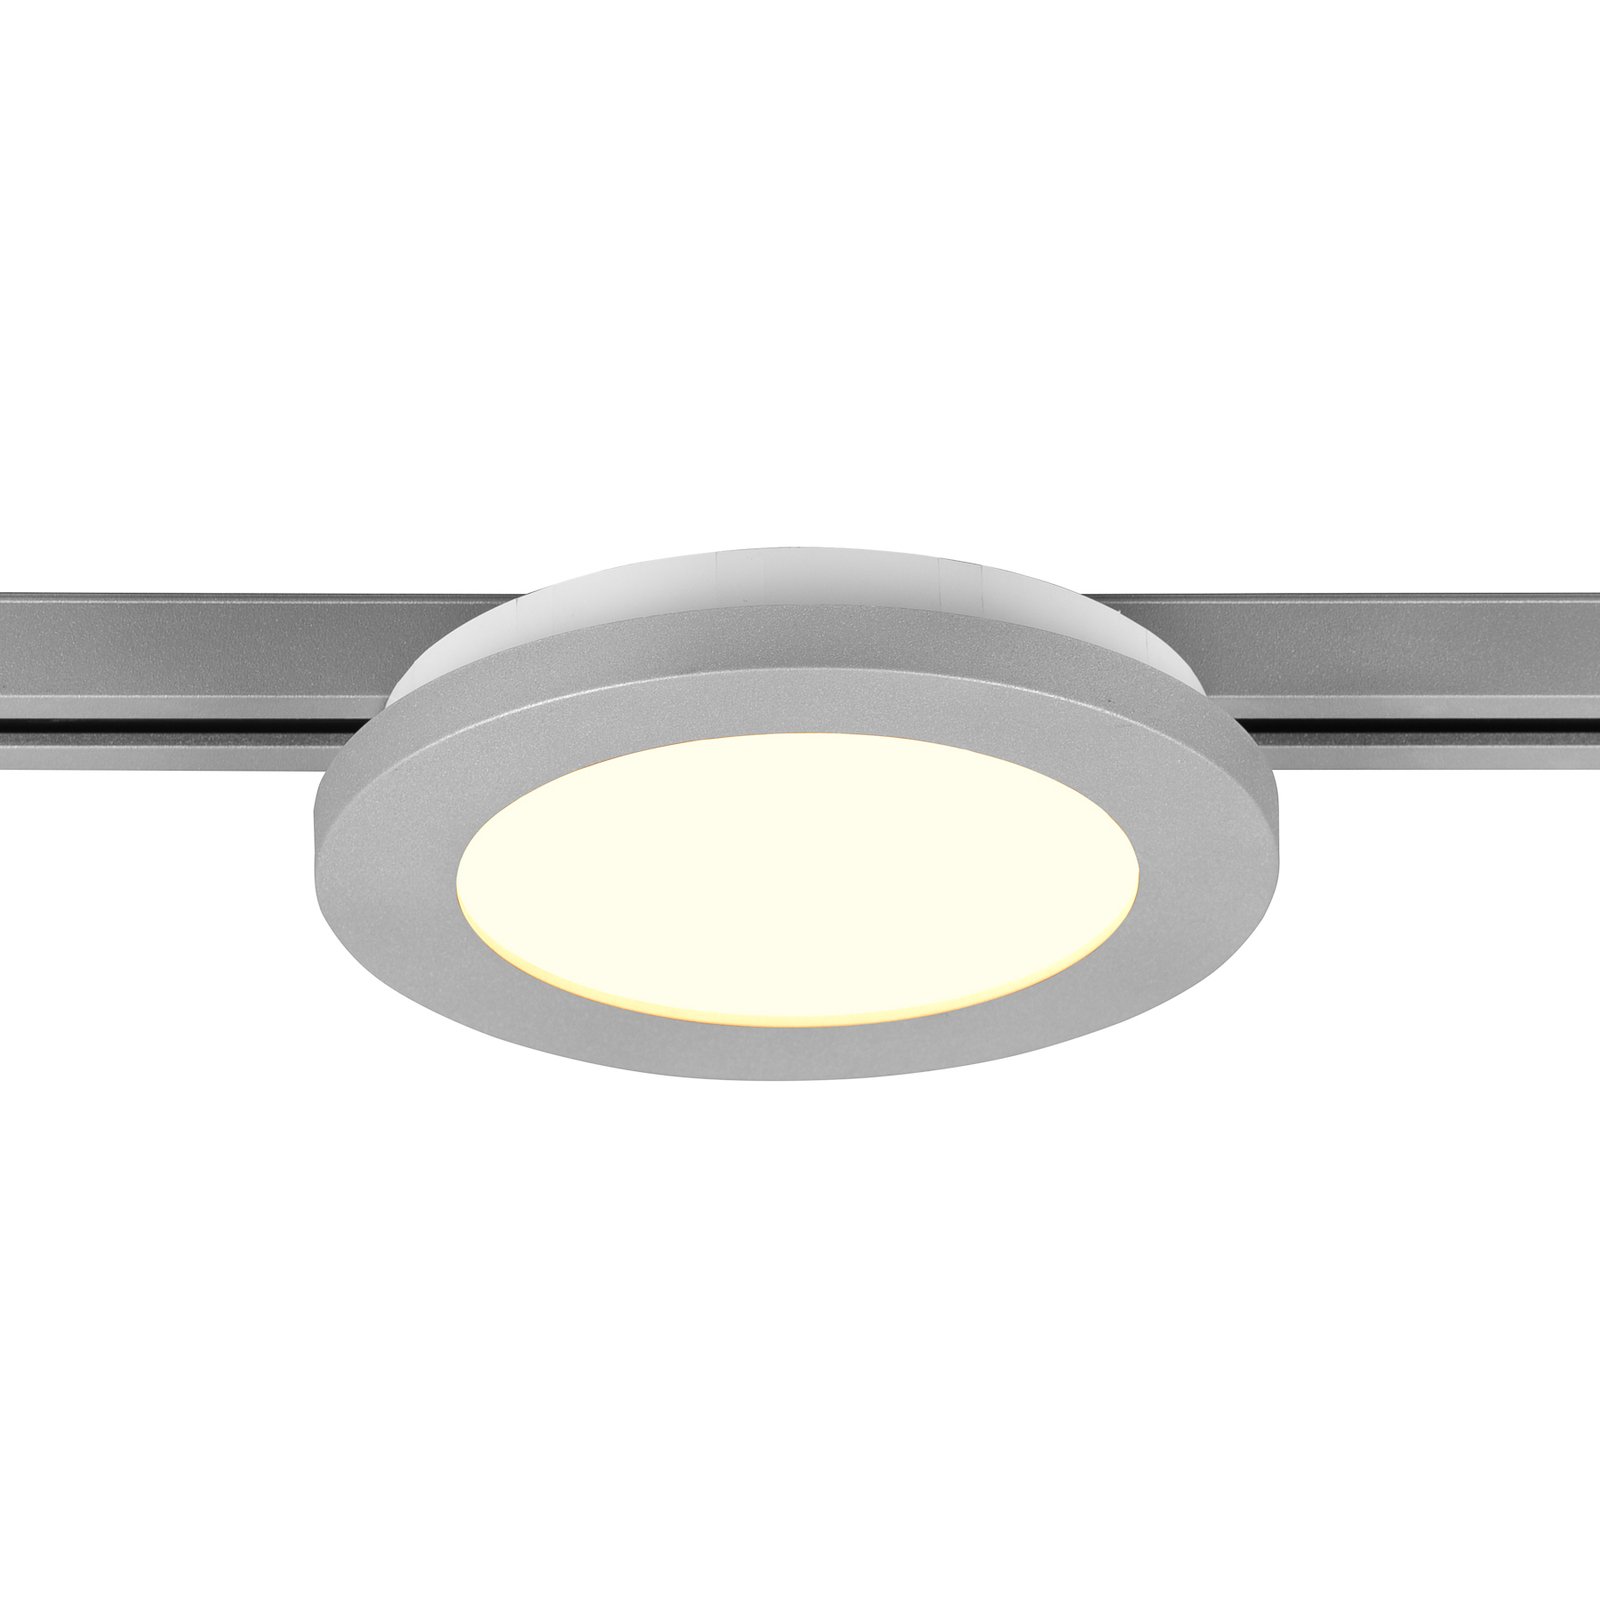 LED plafondlamp Camillus DUOline, Ø 17 cm, titaan